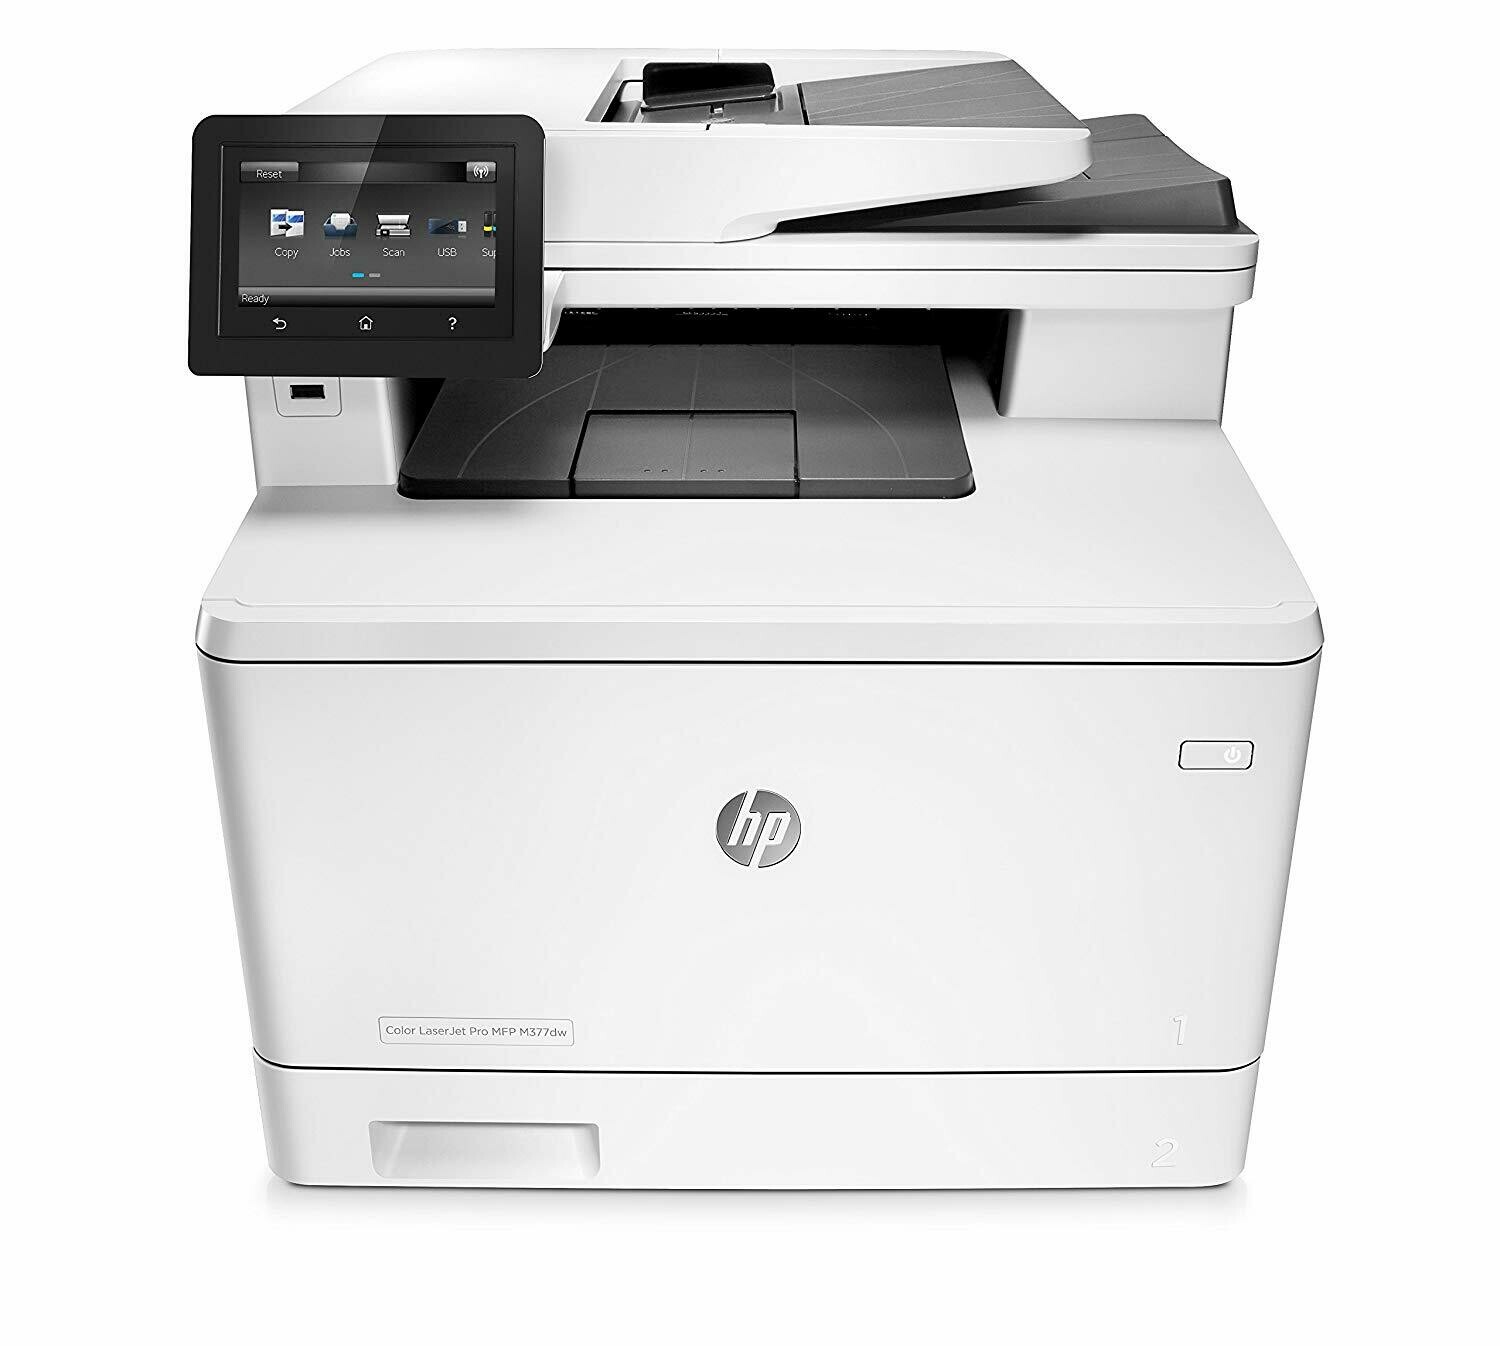 HP Color LaserJet Pro MFP M377dw Multi-Function Printer